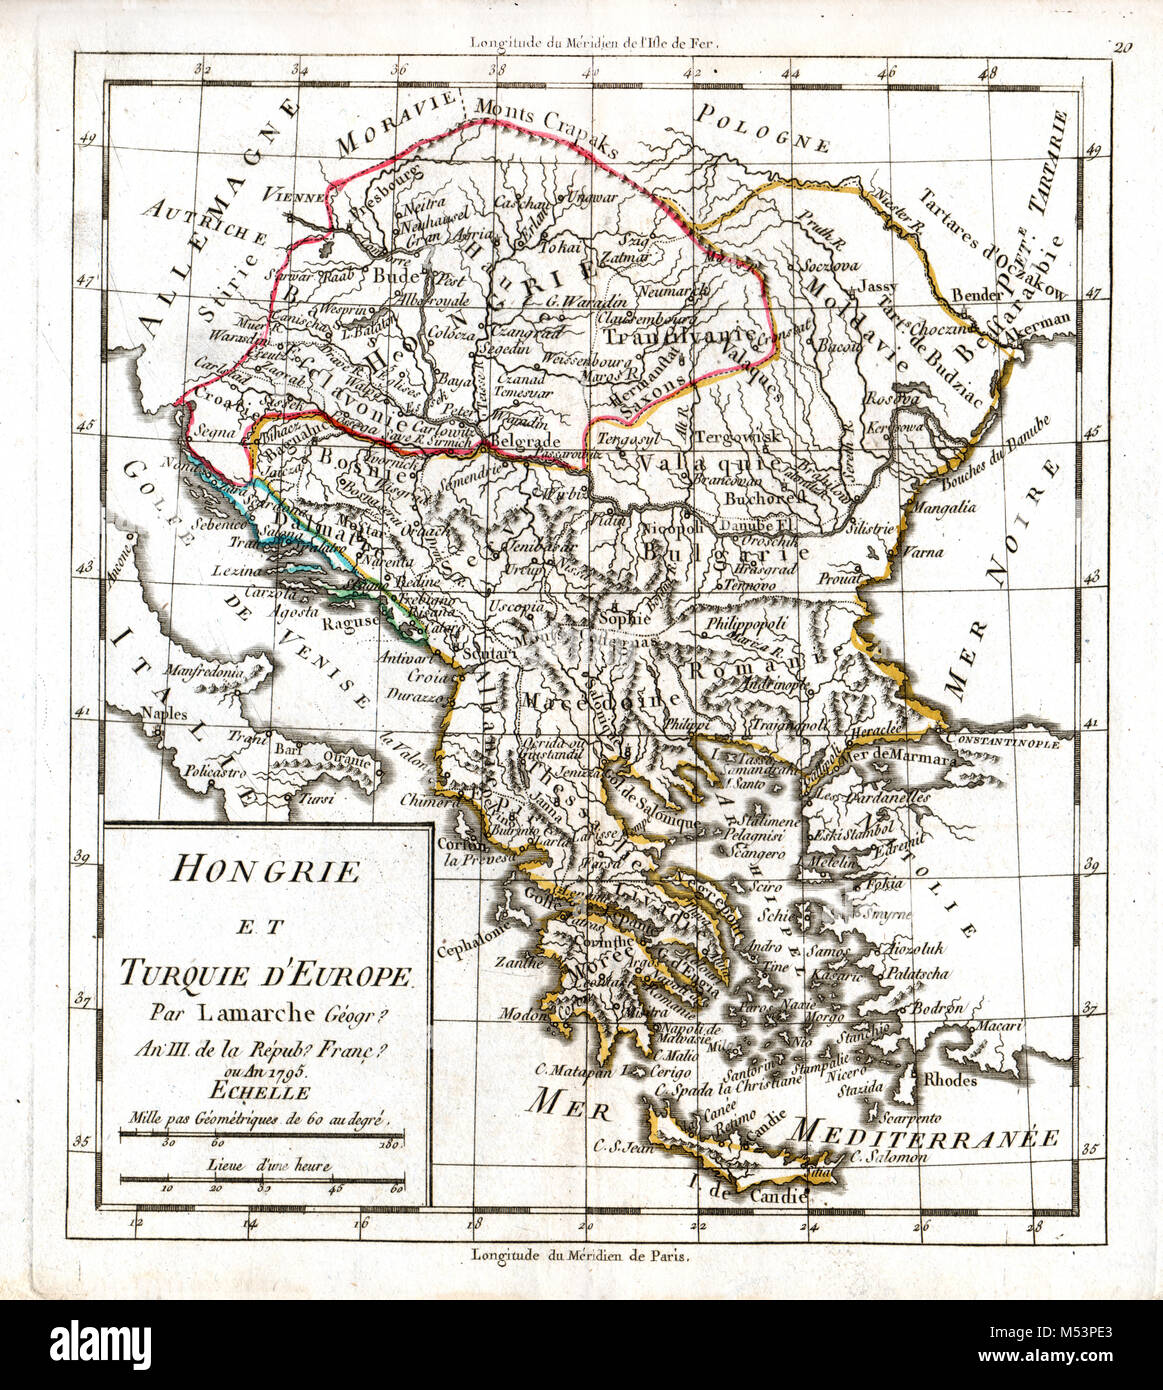 1830 Delamarche Atlas Map Greece Turkey Bulgaria Macedonia Romania Hungary Transylvania Balkans Europe Stock Photo